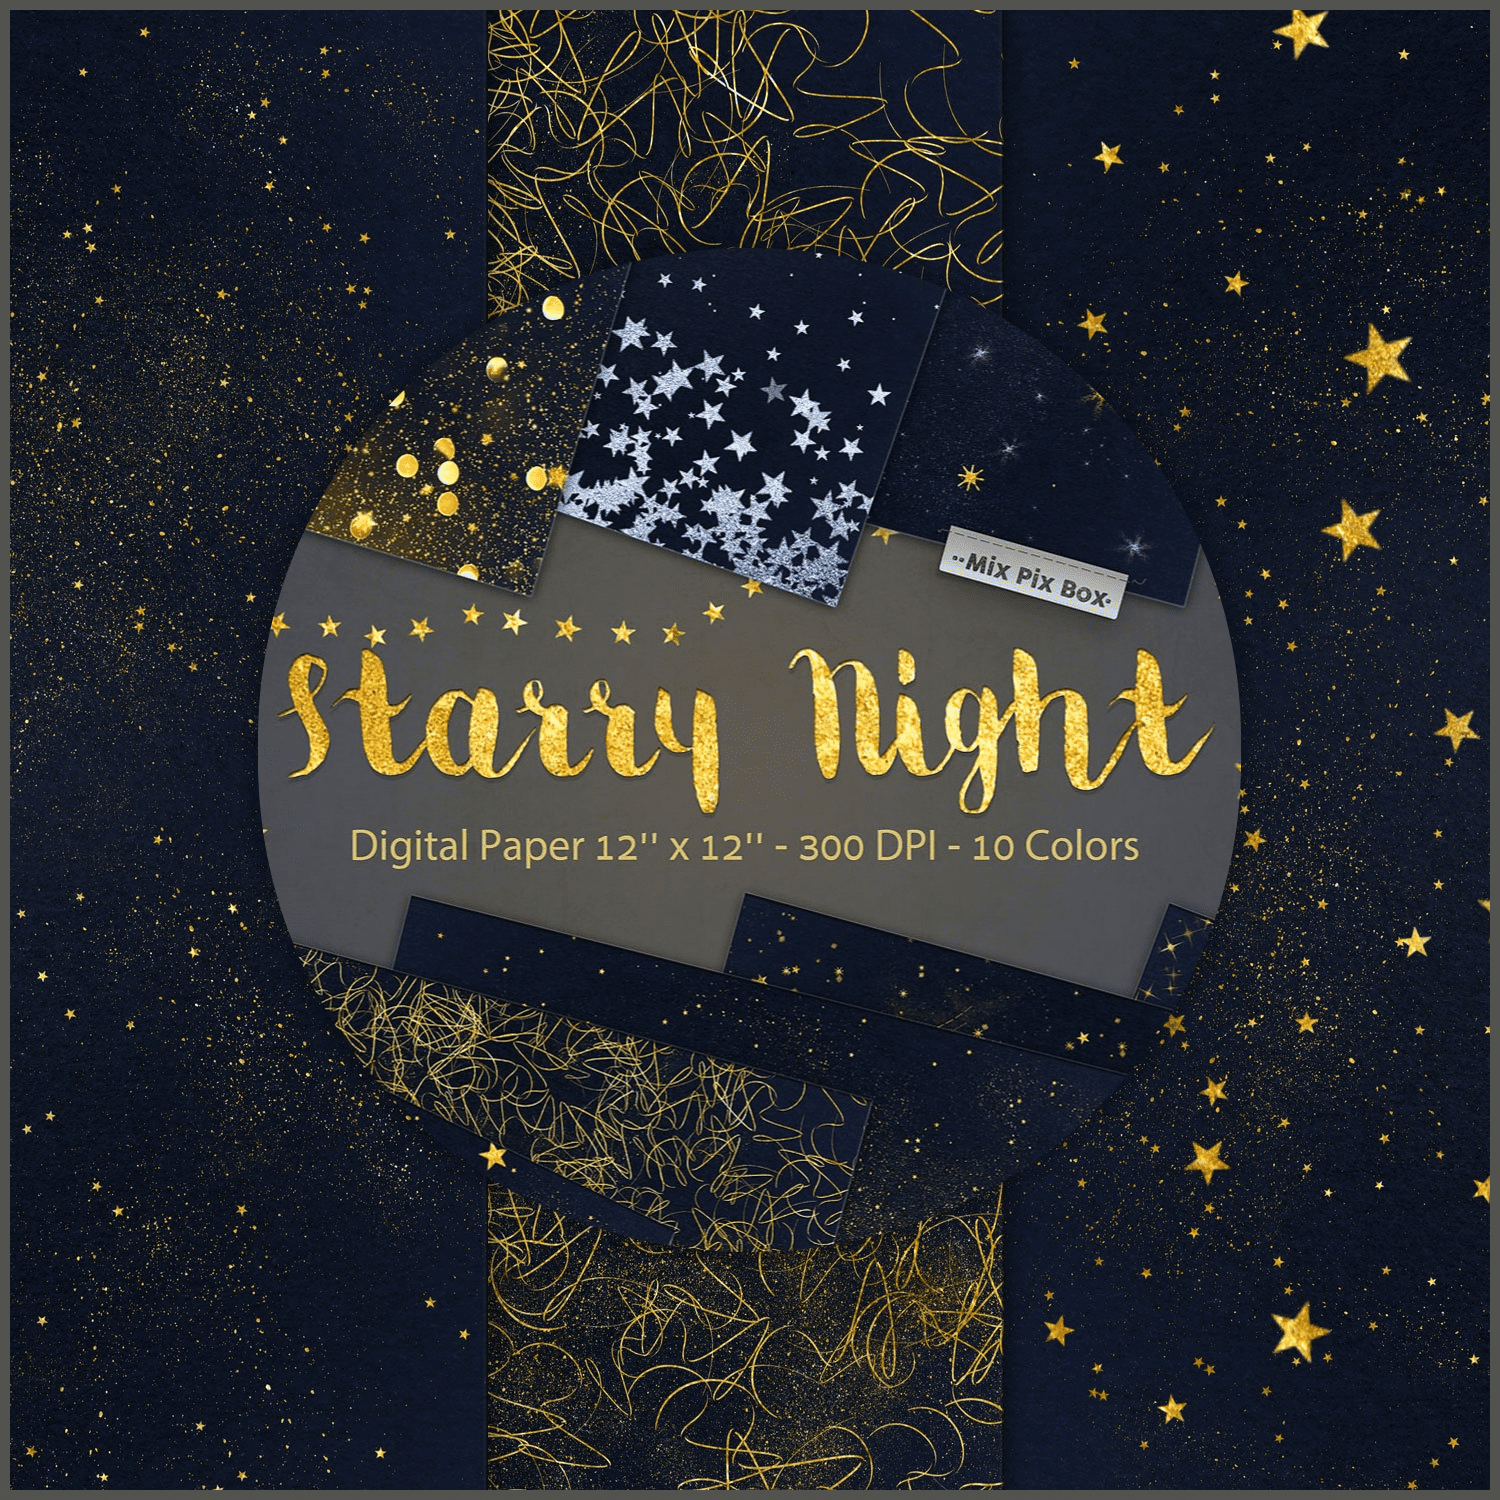 Starry Night Digital Paper.